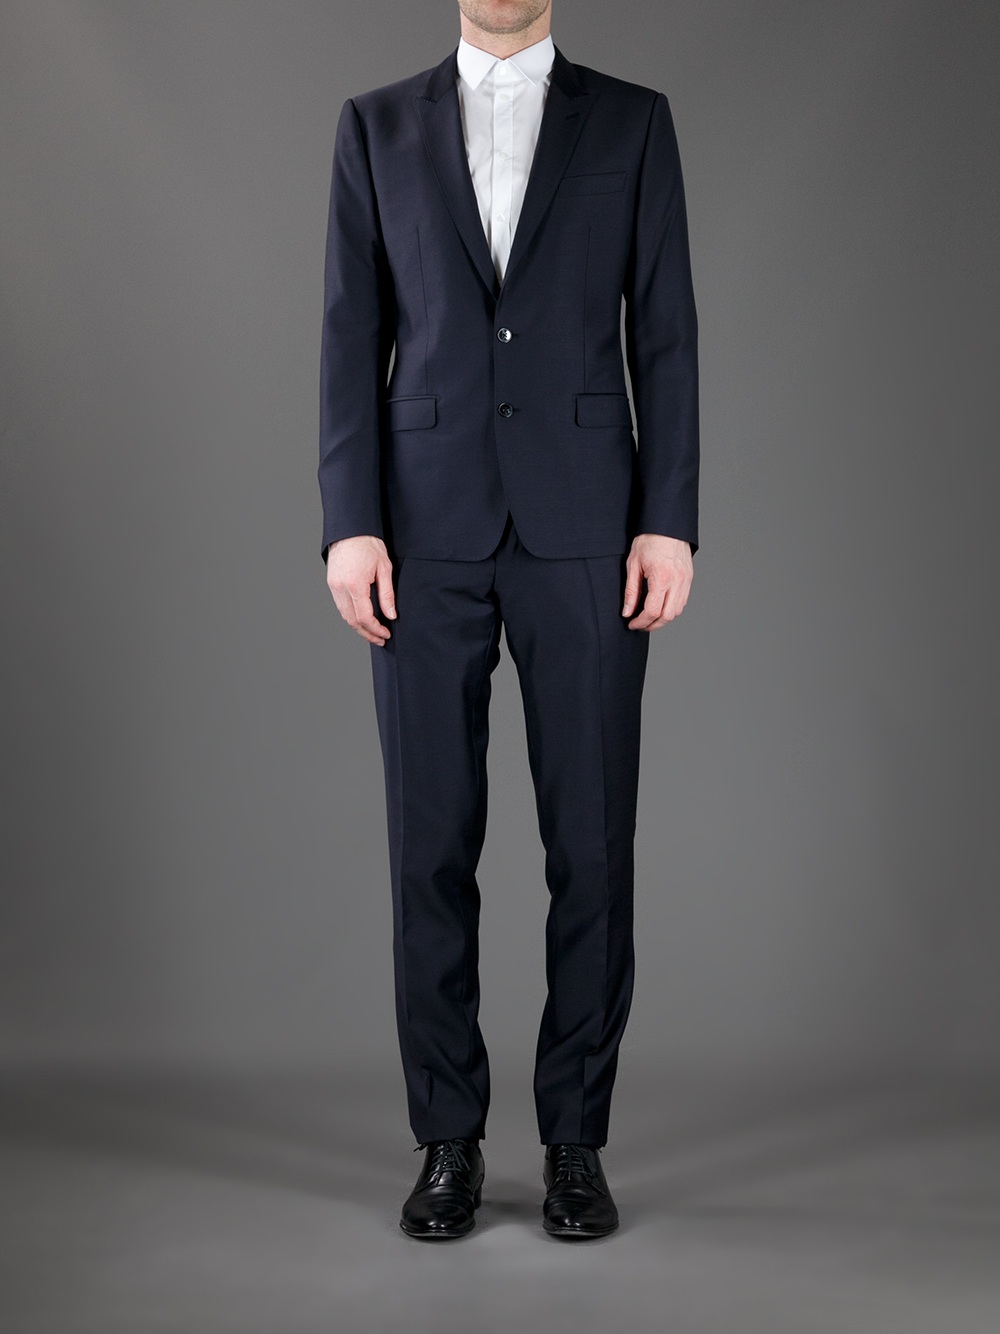 Men's luxury suit - Dolce & Gabbana dark gray two-piece suit with burgundy  stripes